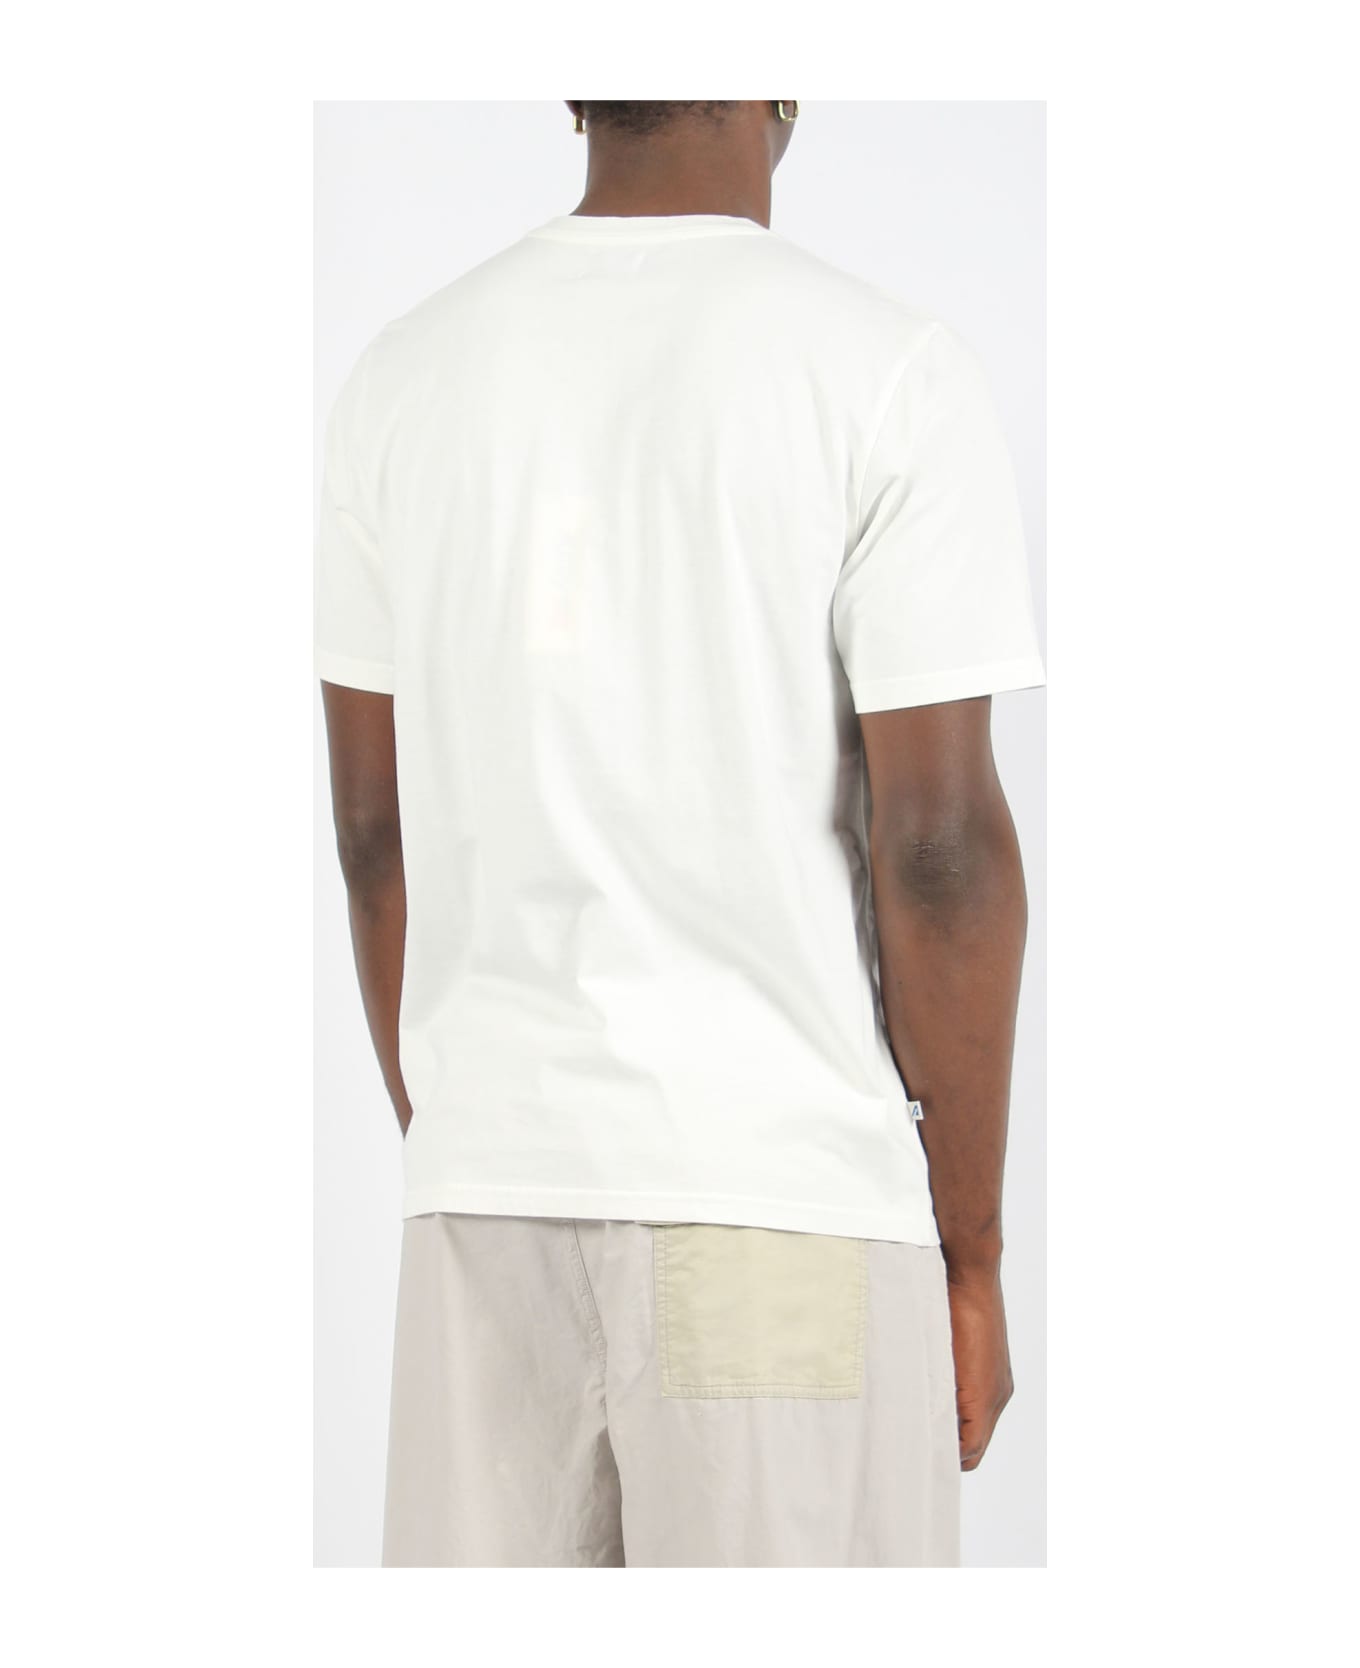 Autry Cotton Crew Neck T-shirt - White